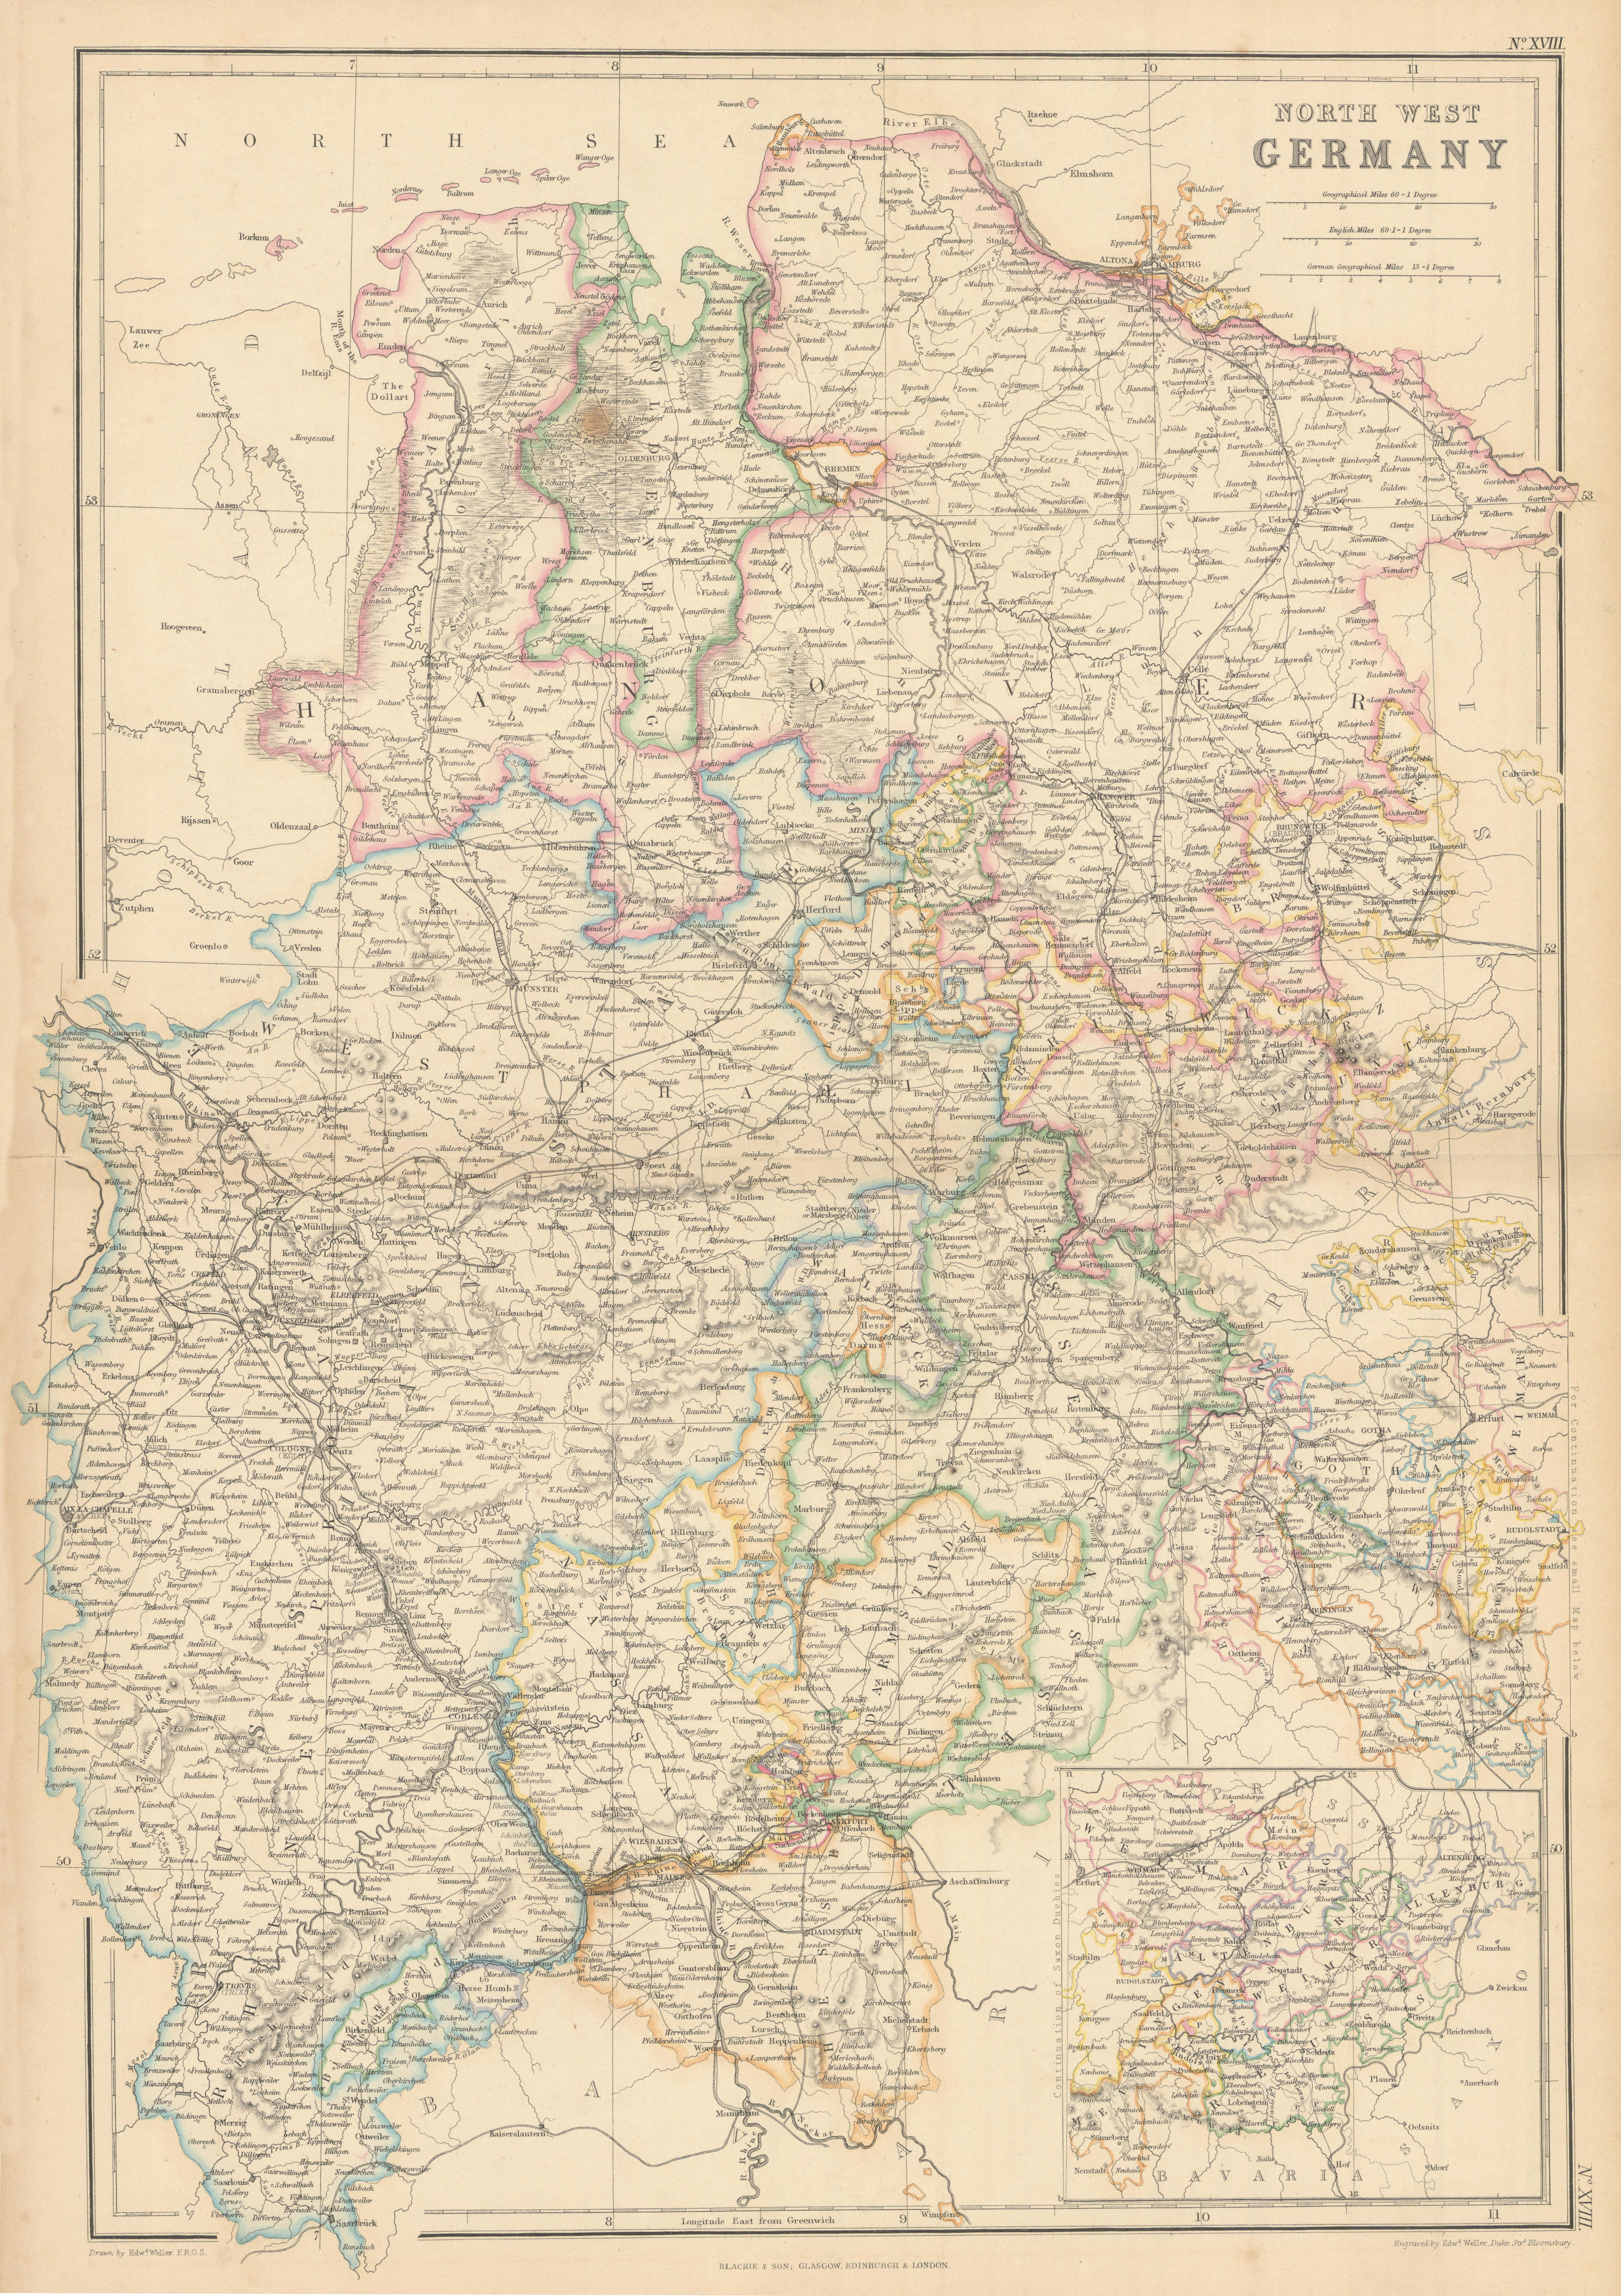 Associate Product North-West Germany. Hanover, Rhenish Prussia, Nassau, Hesse. WELLER 1859 map